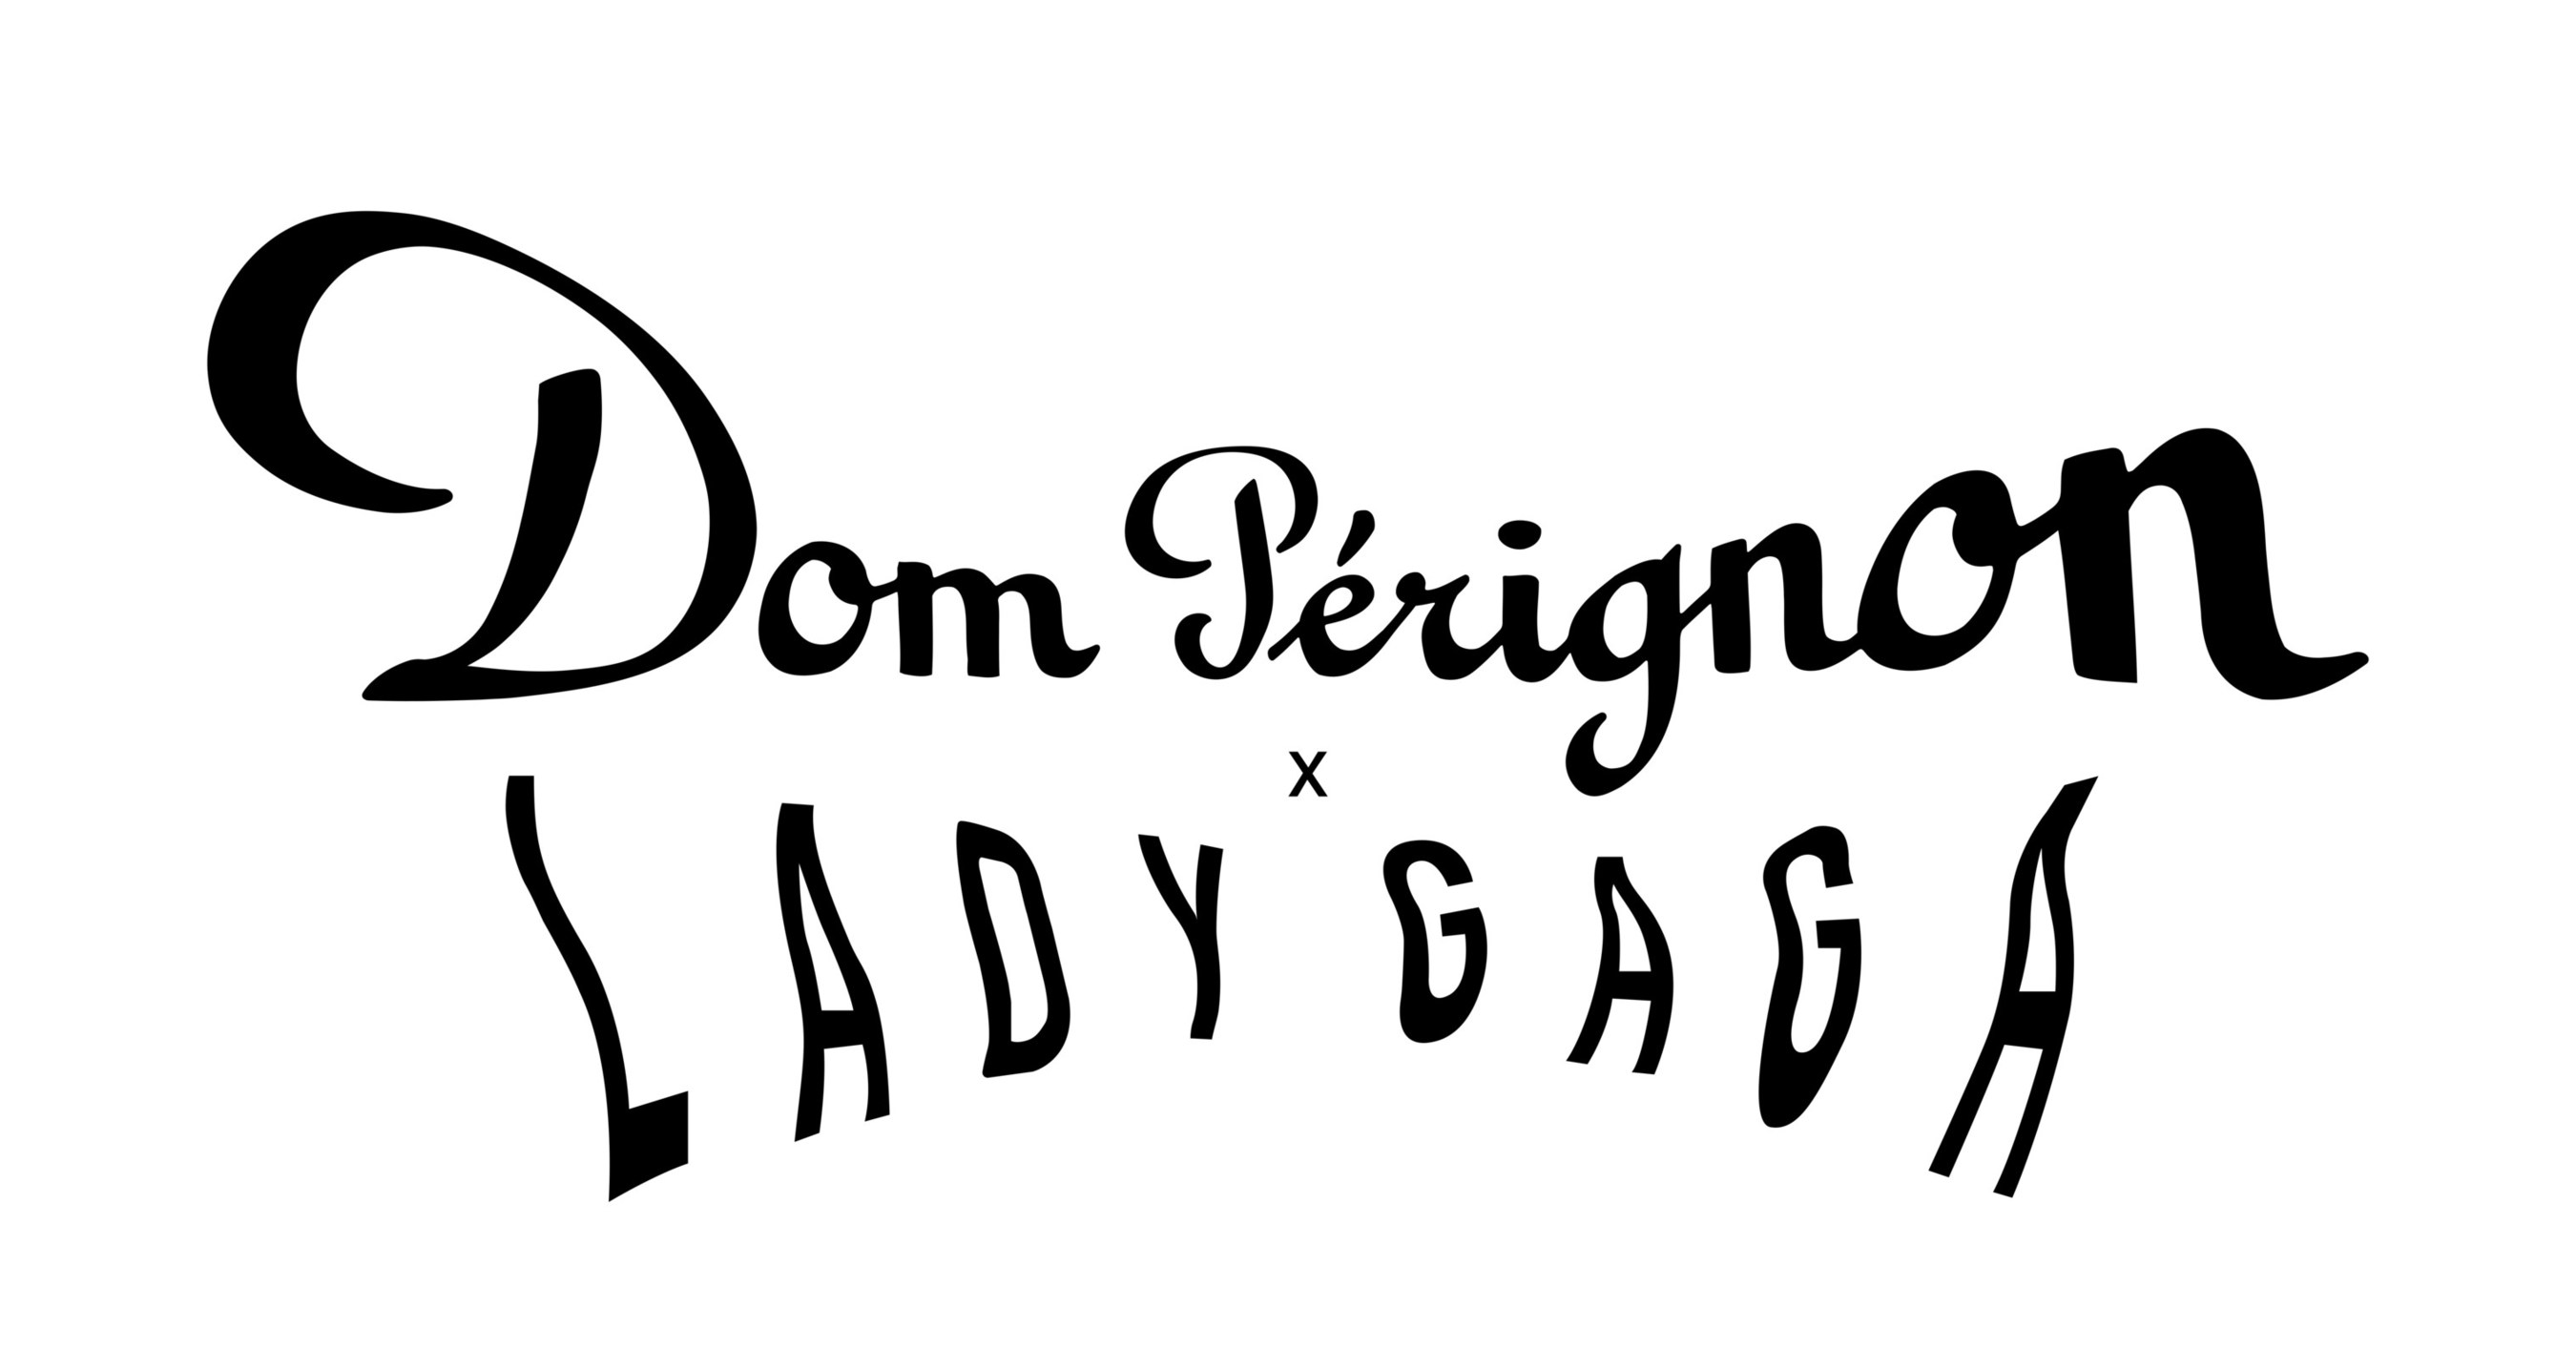 Dom Perignon X Lady Gaga